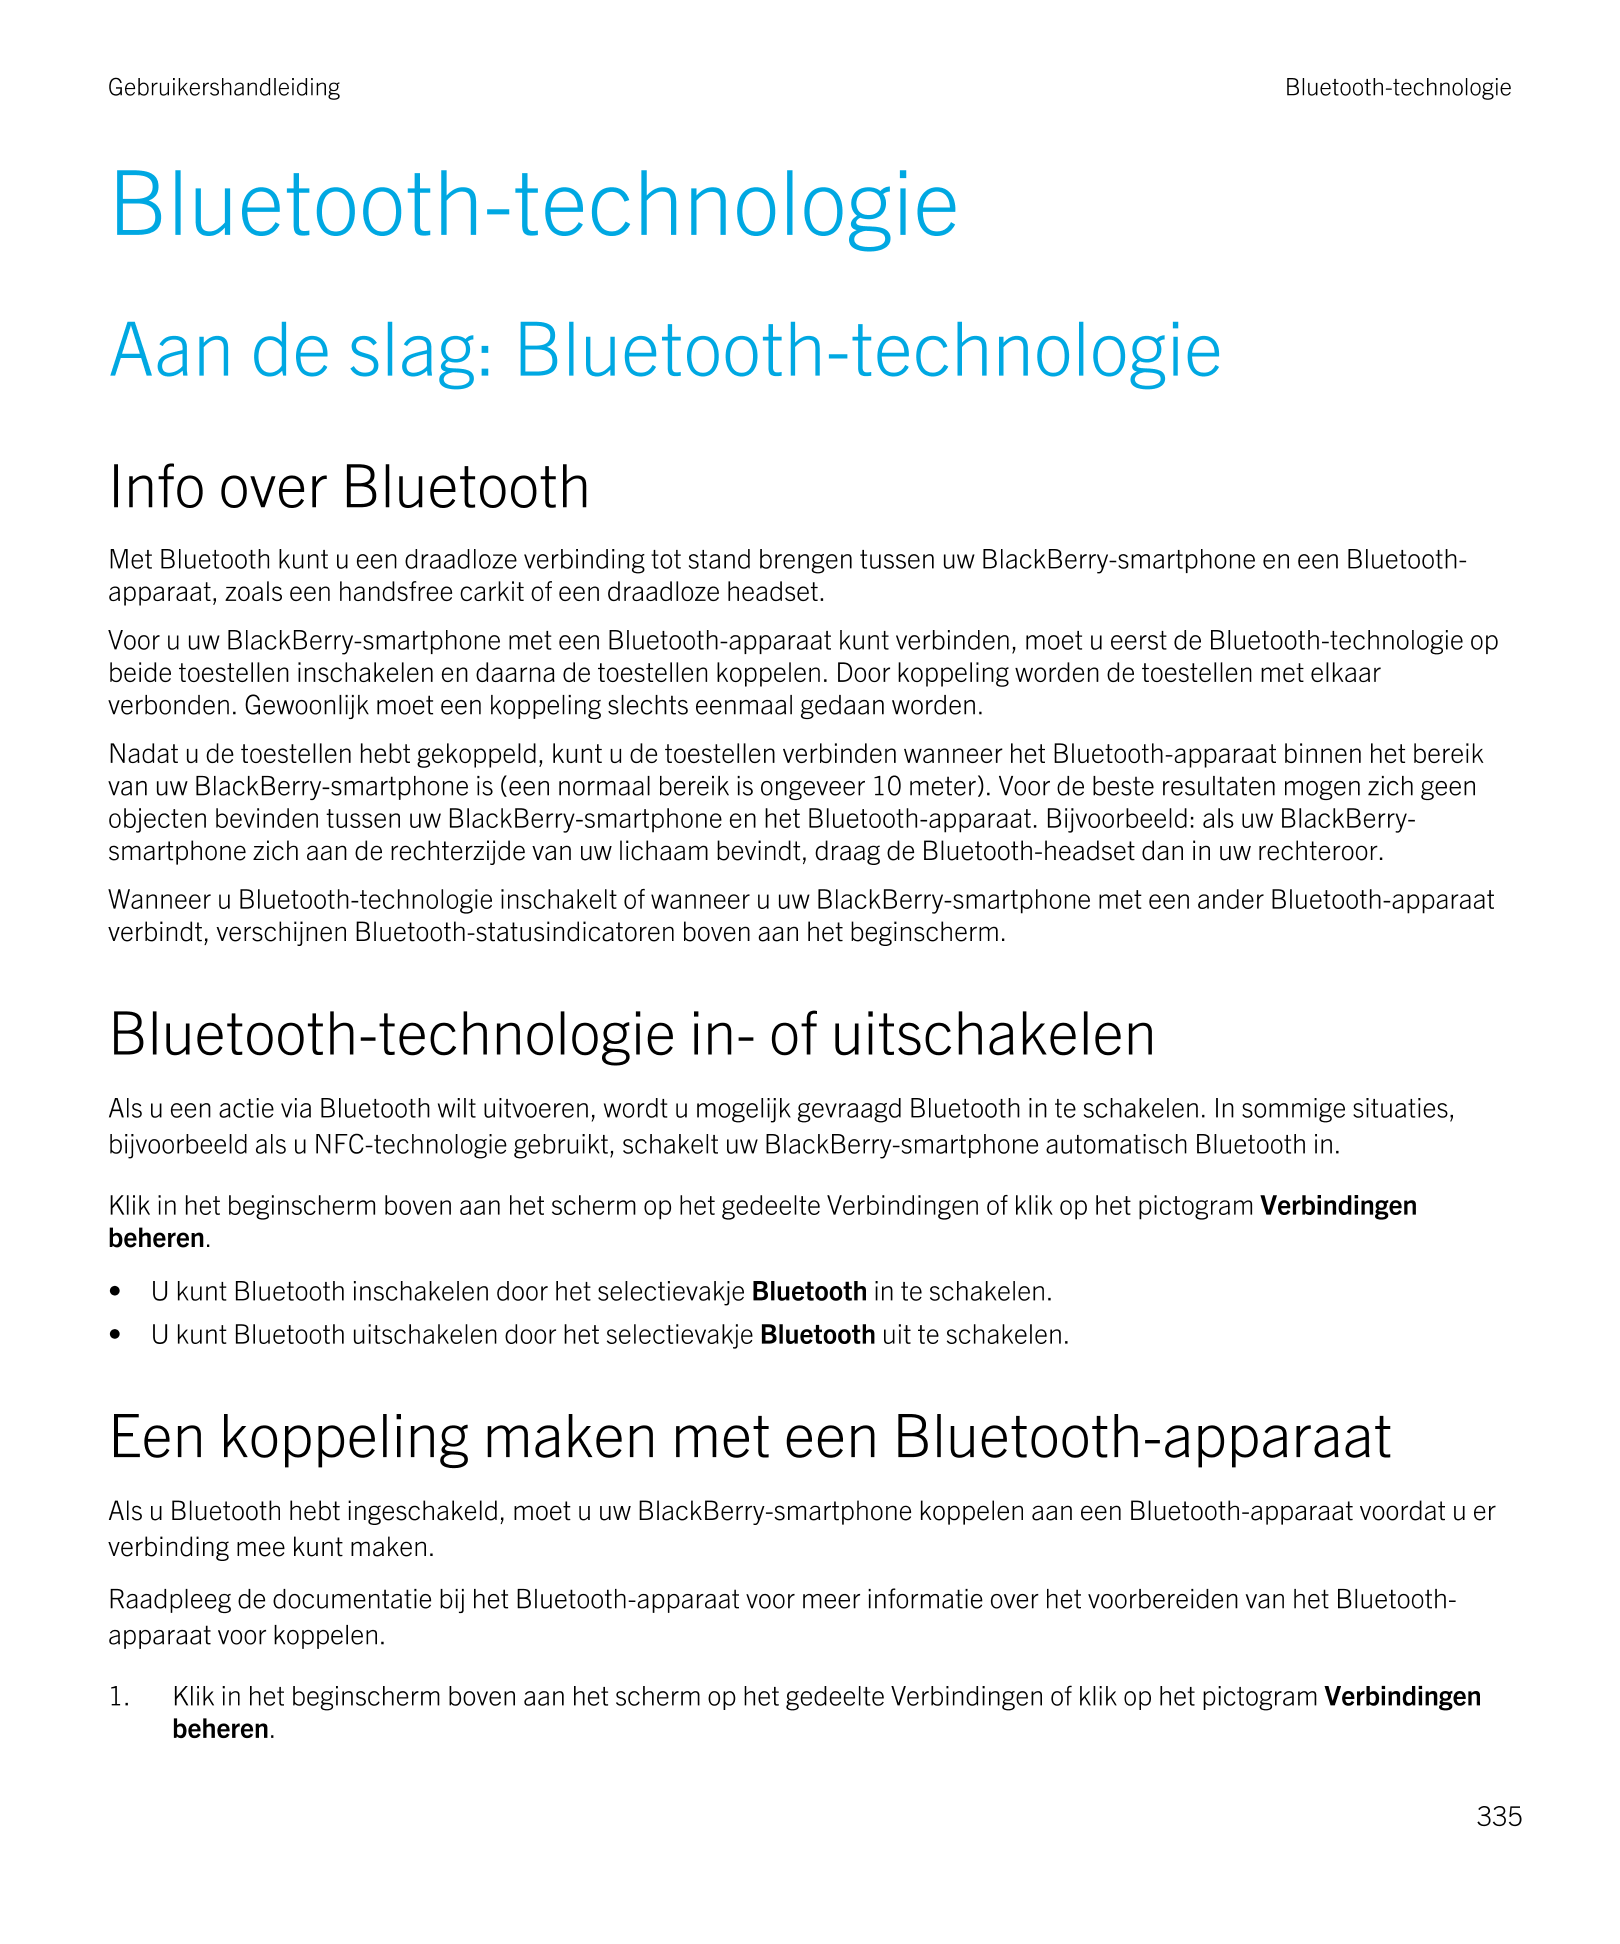 Gebruikershandleiding Bluetooth-technologie
Bluetooth-technologie
Aan de slag:  Bluetooth-technologie
Info over  Bluetooth
Met  